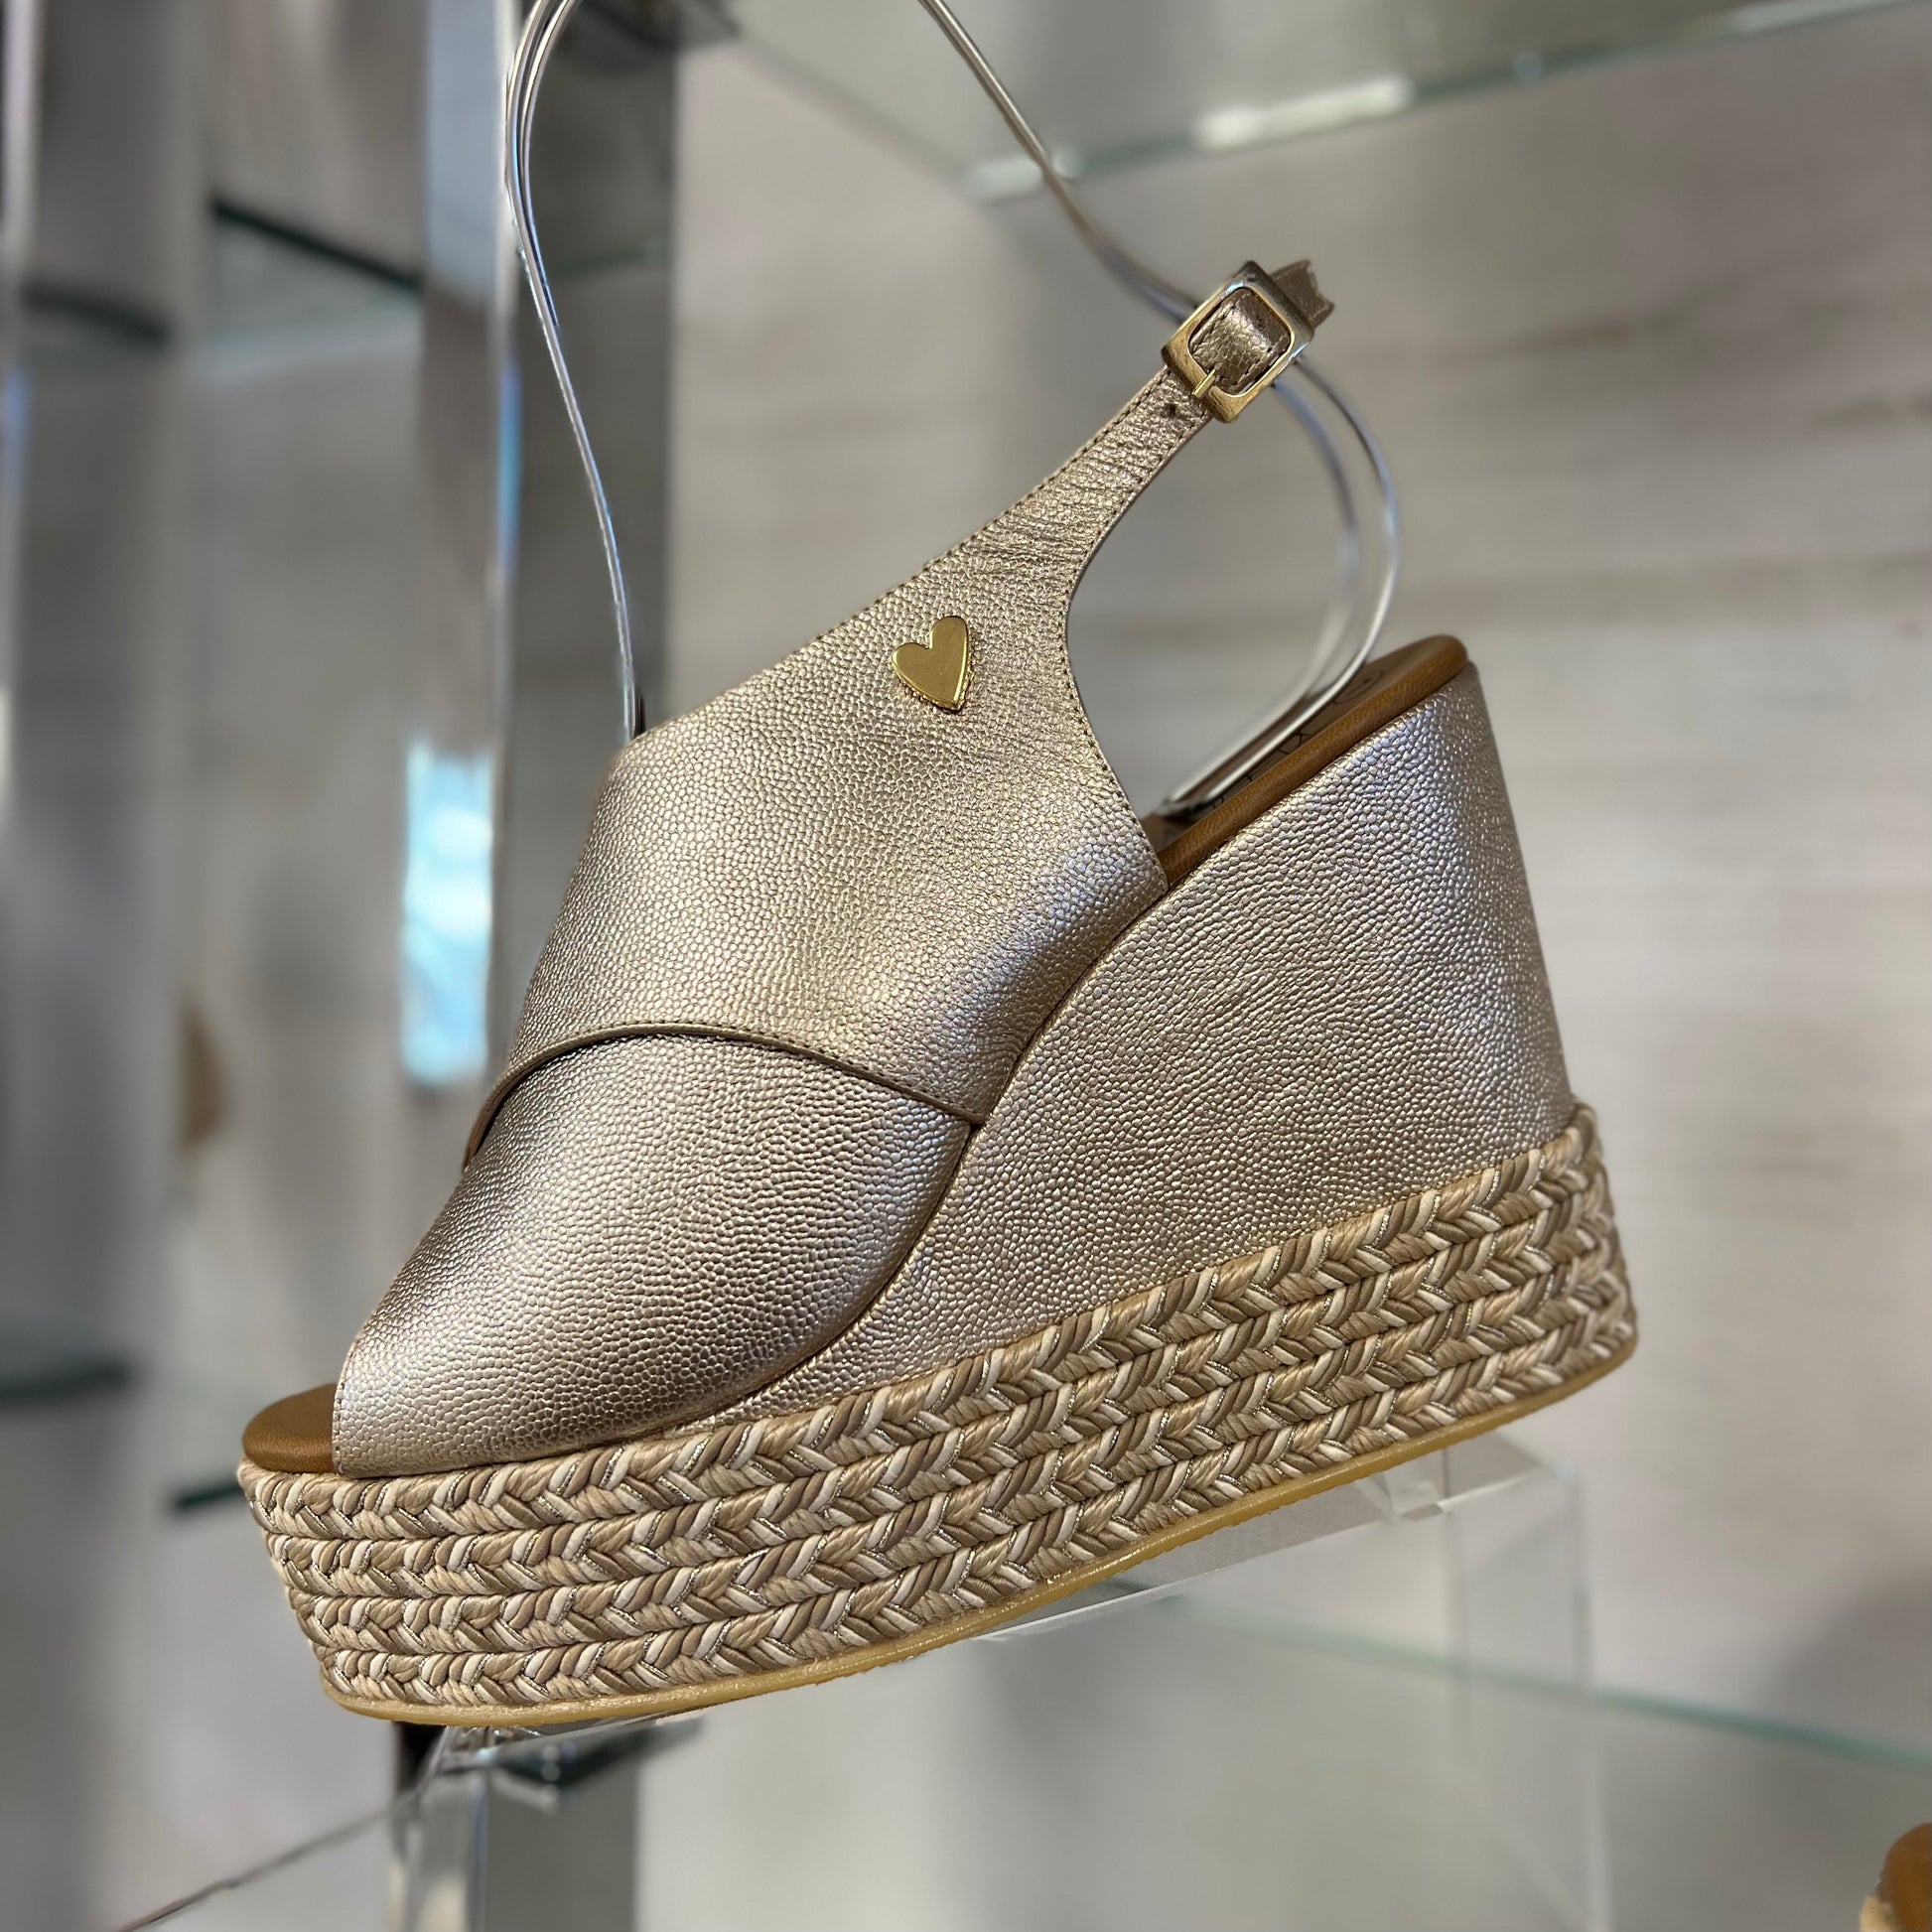  Tasya Sandals Gold - Leather